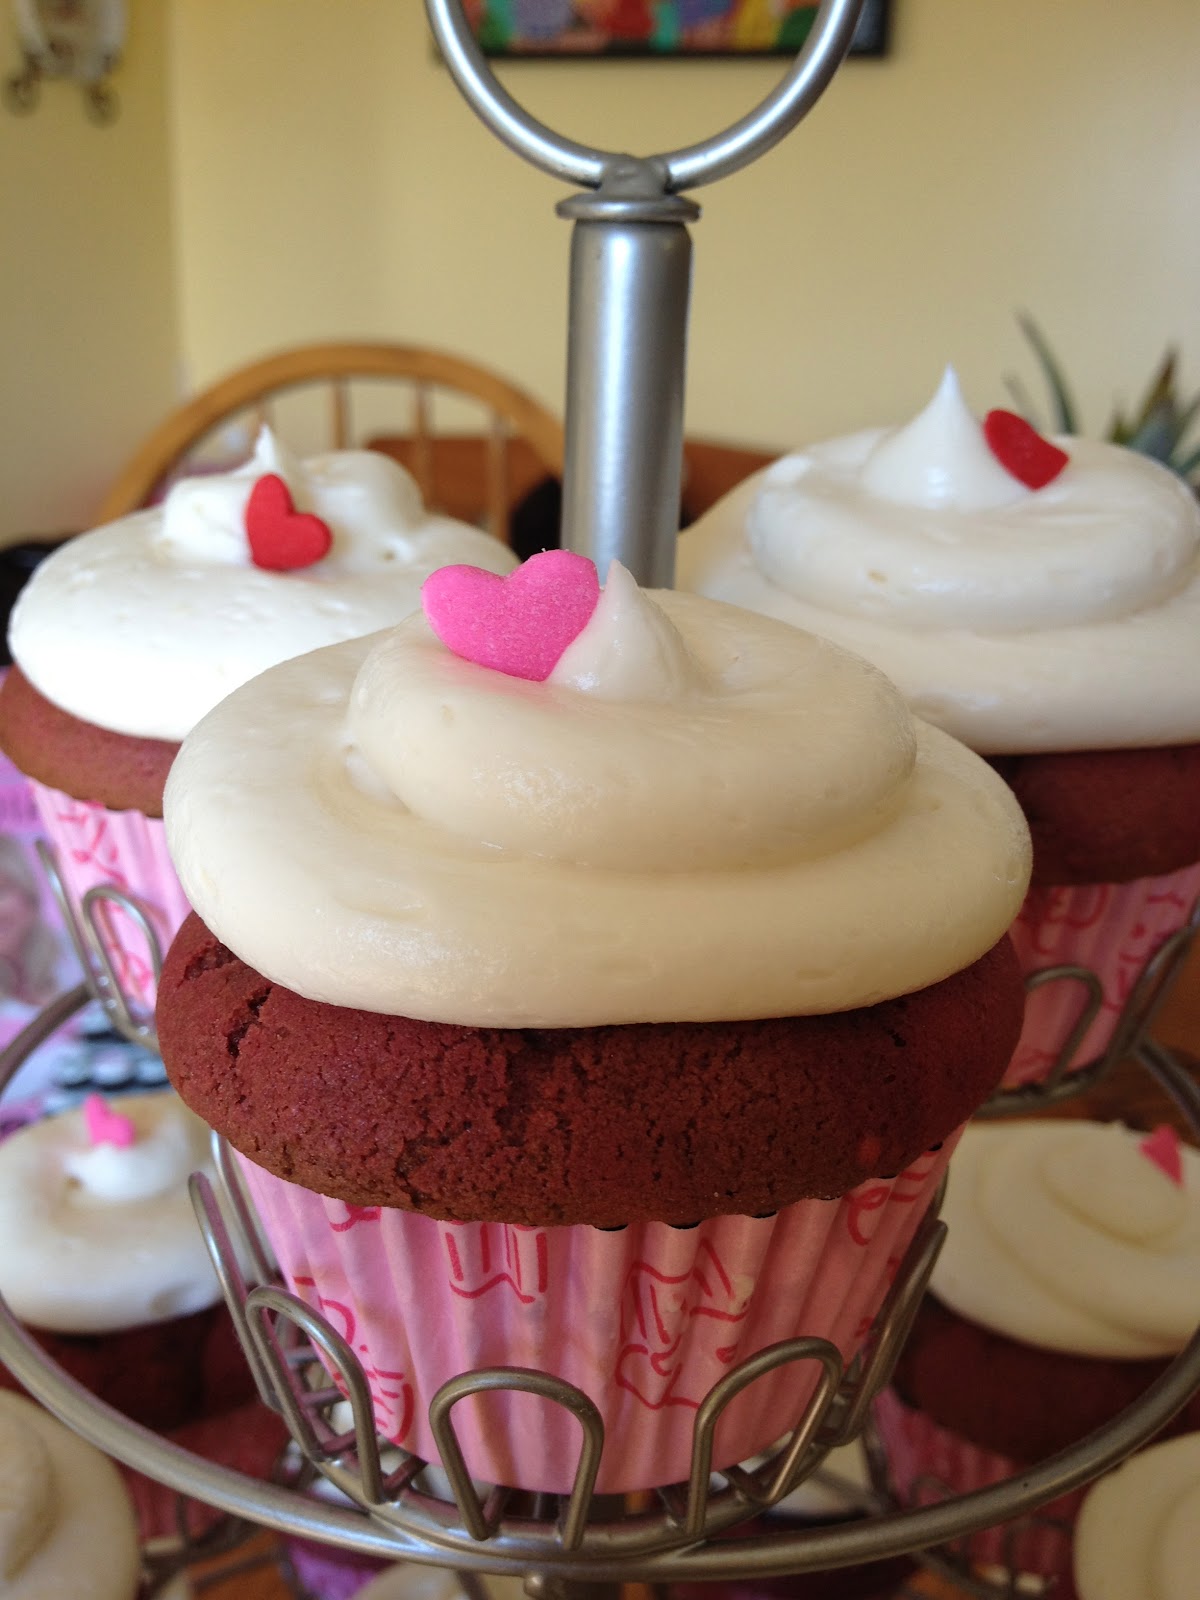 Red Velvet Cupcakes with Chocolate Ganache